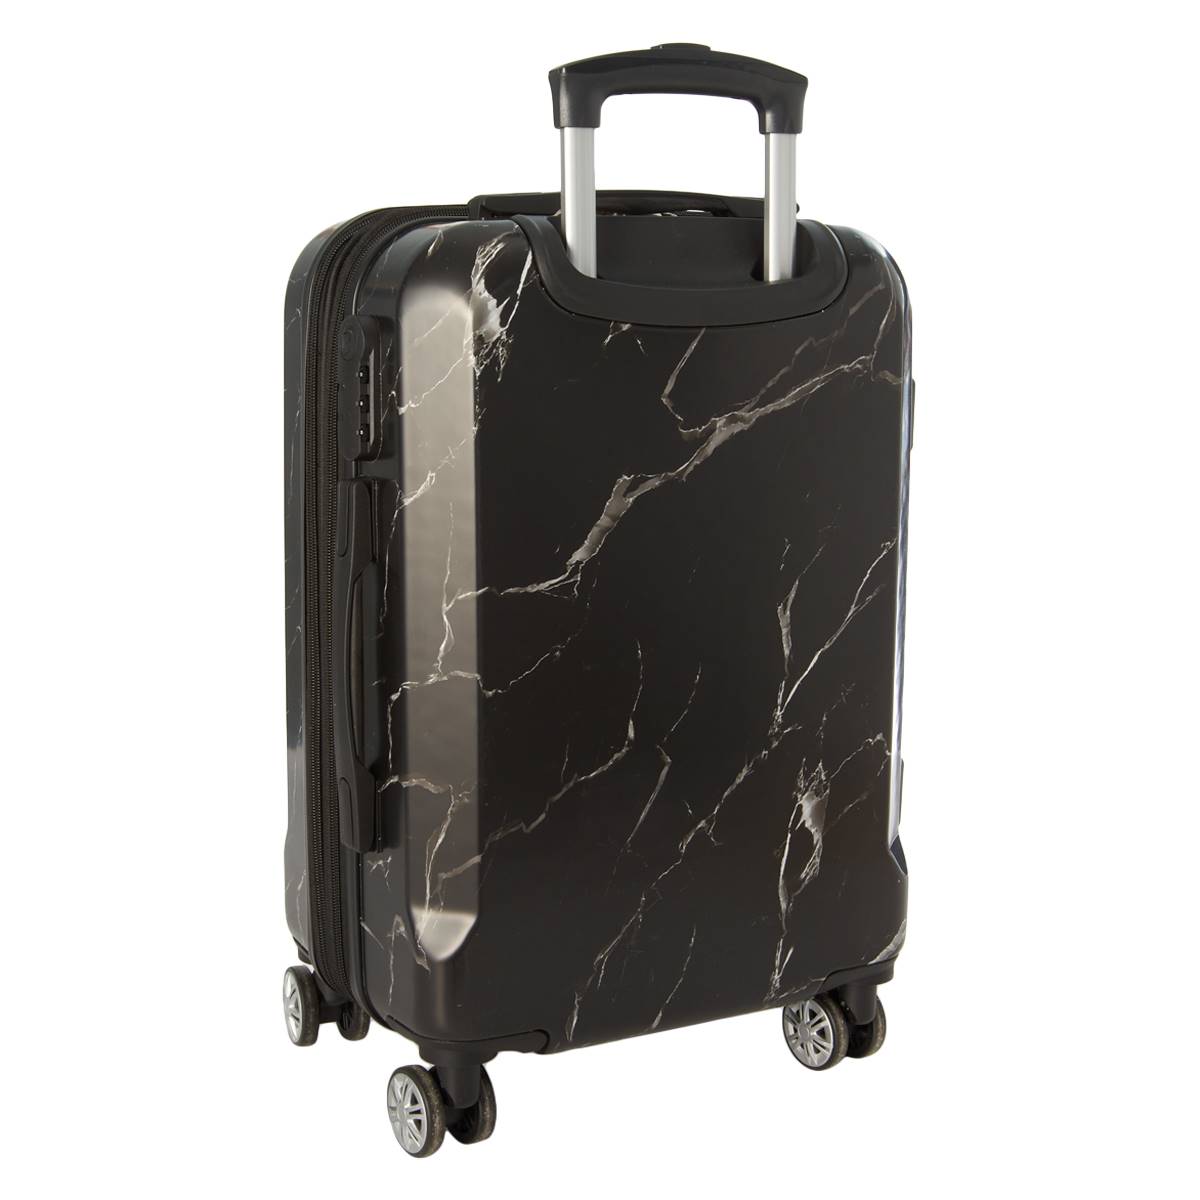 Journey 24in. Marble Hardside Spinner Luggage - Black